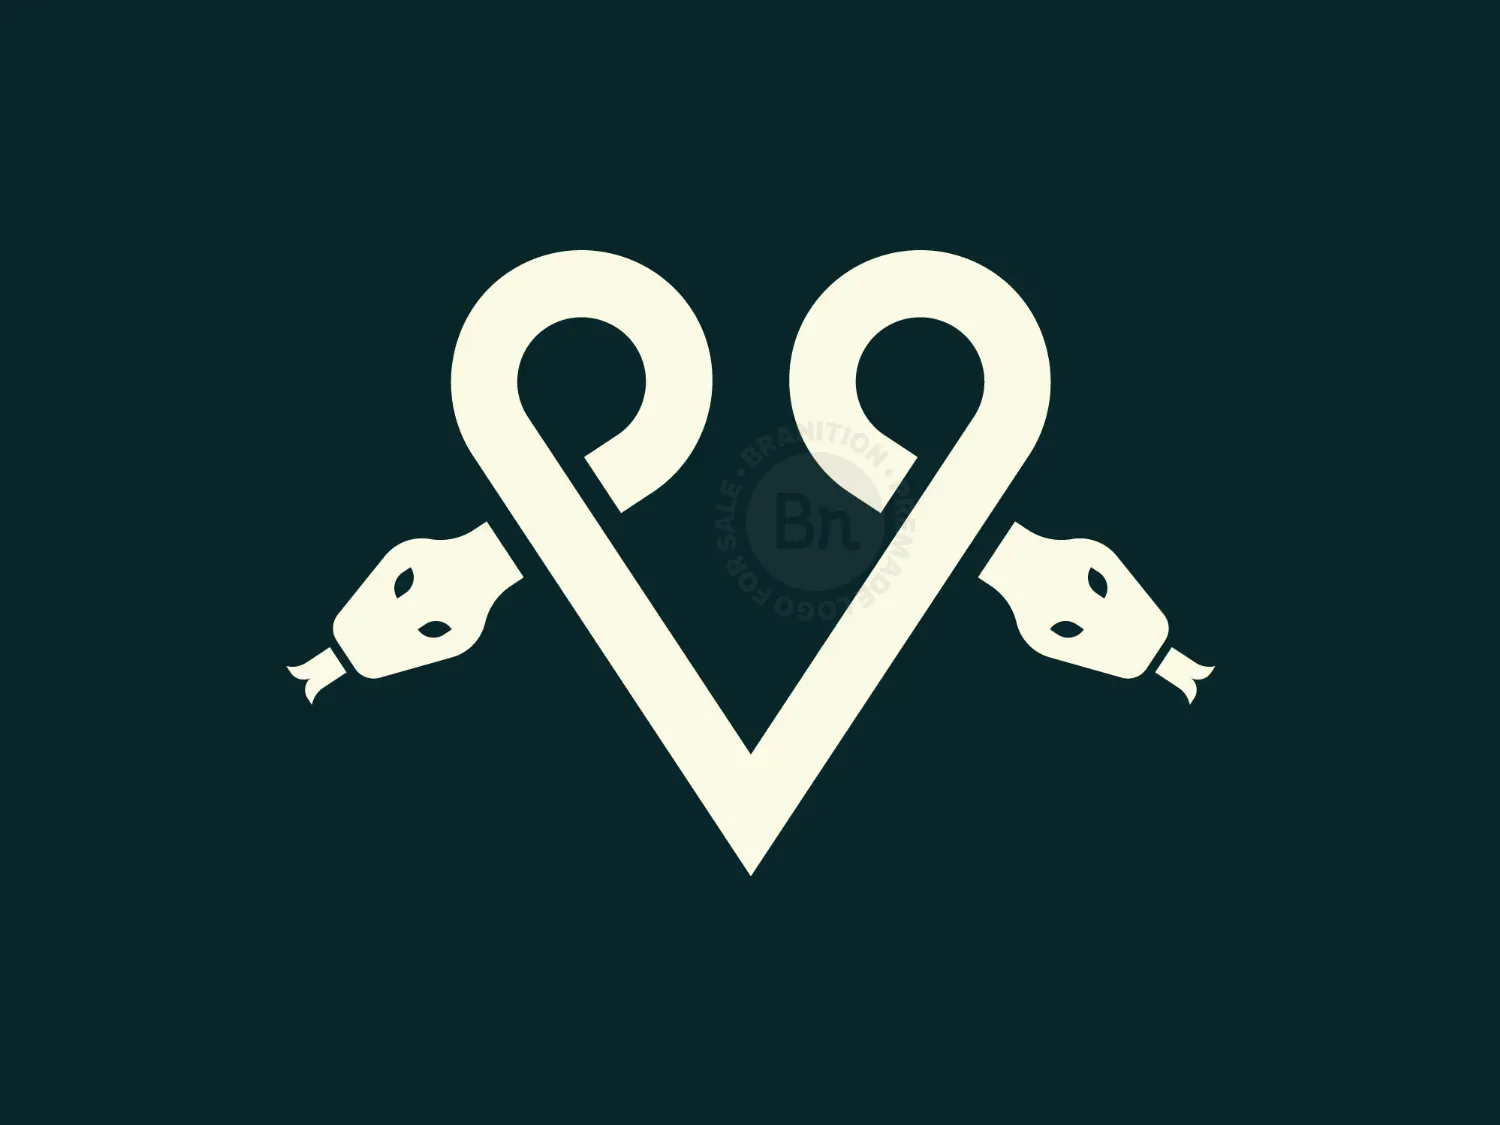 Bold Letter V With Snake Logo